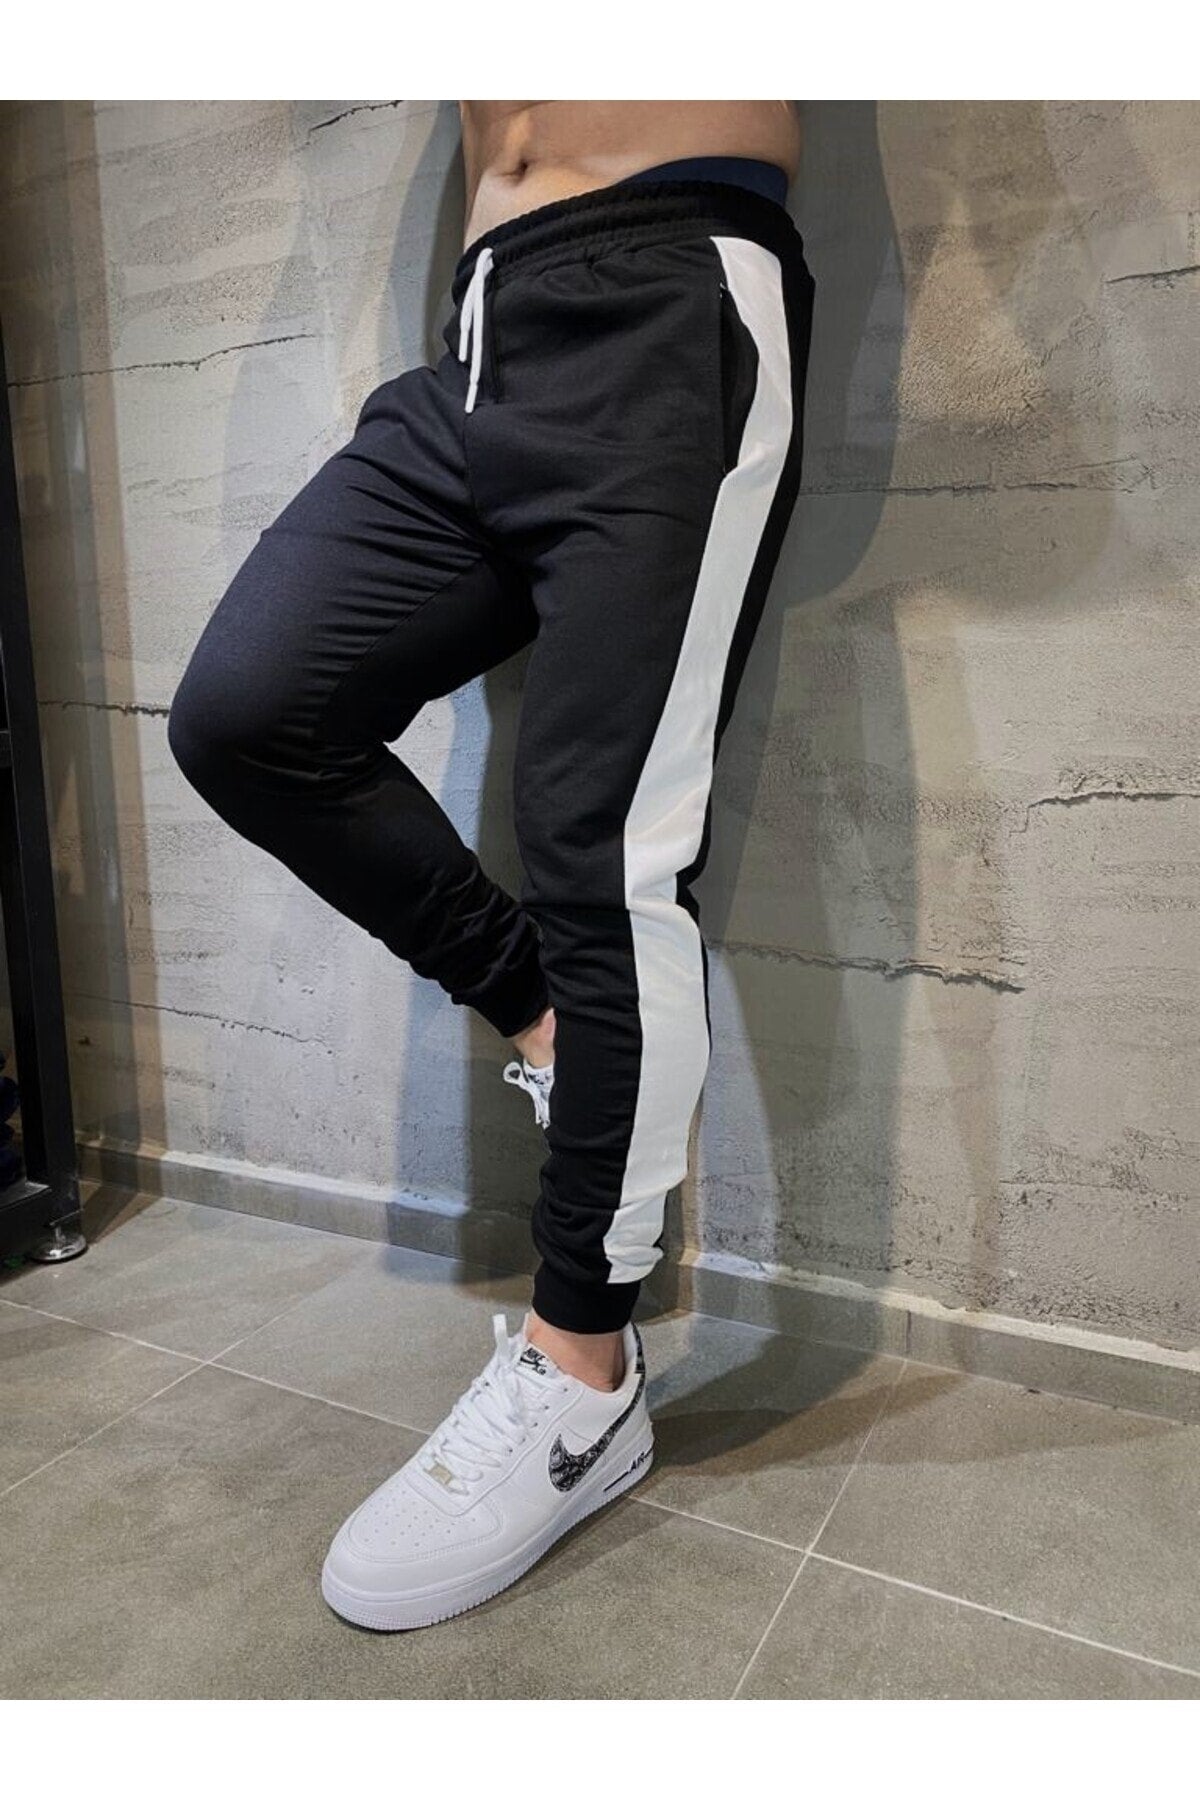 Men's Black and White Striped Sweatpants Cotton Elastic Leg